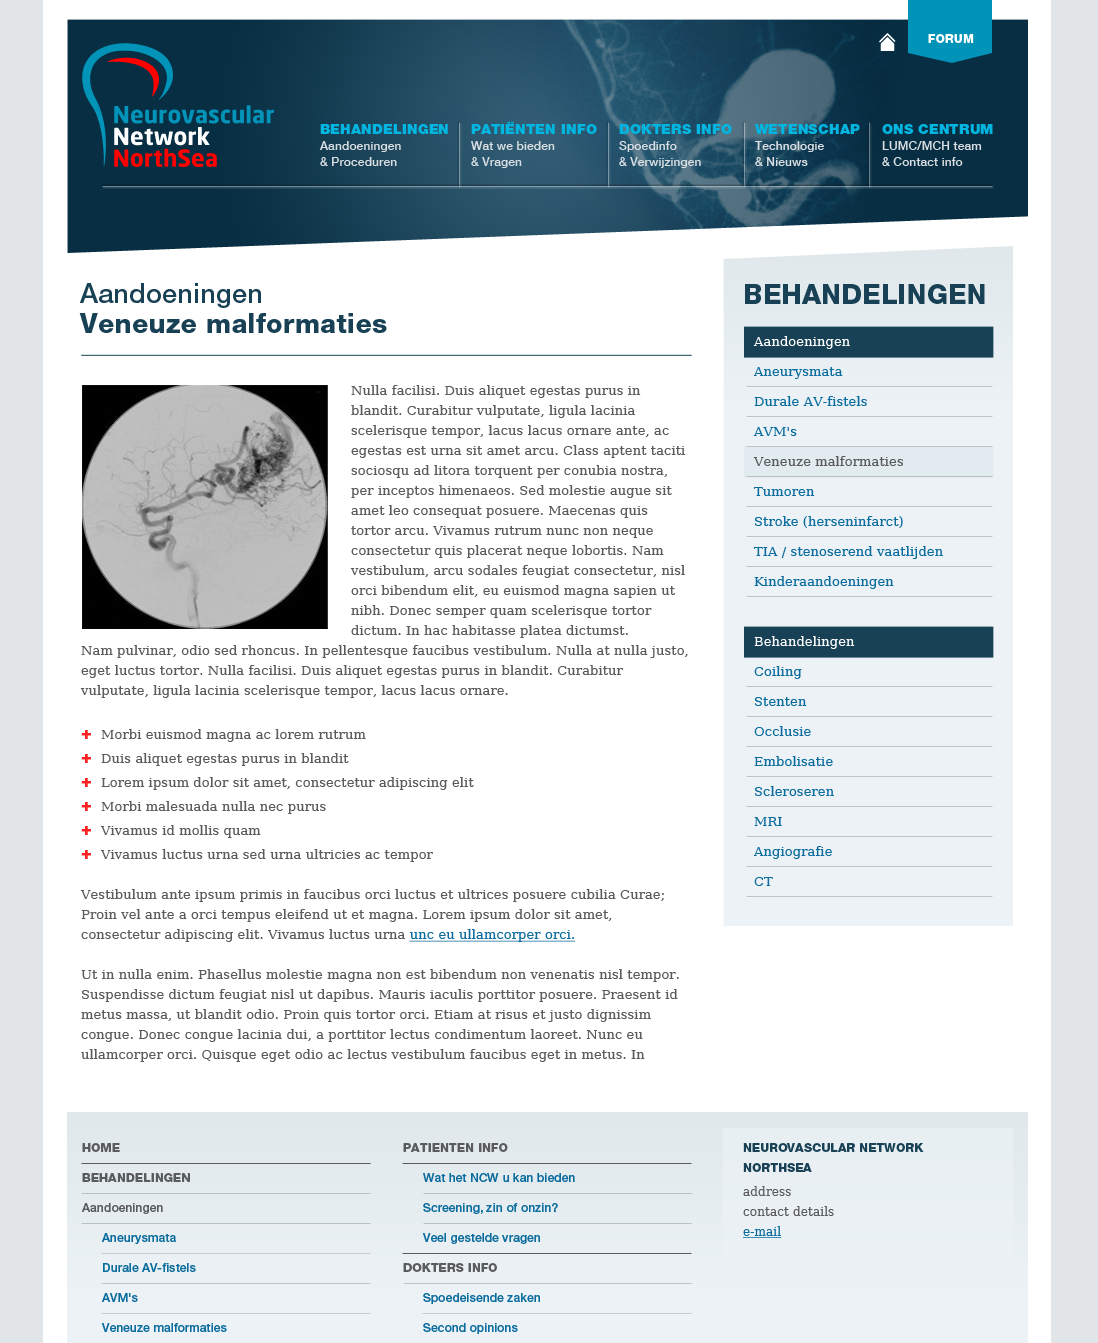 Neurovascular Network Northsea, NL